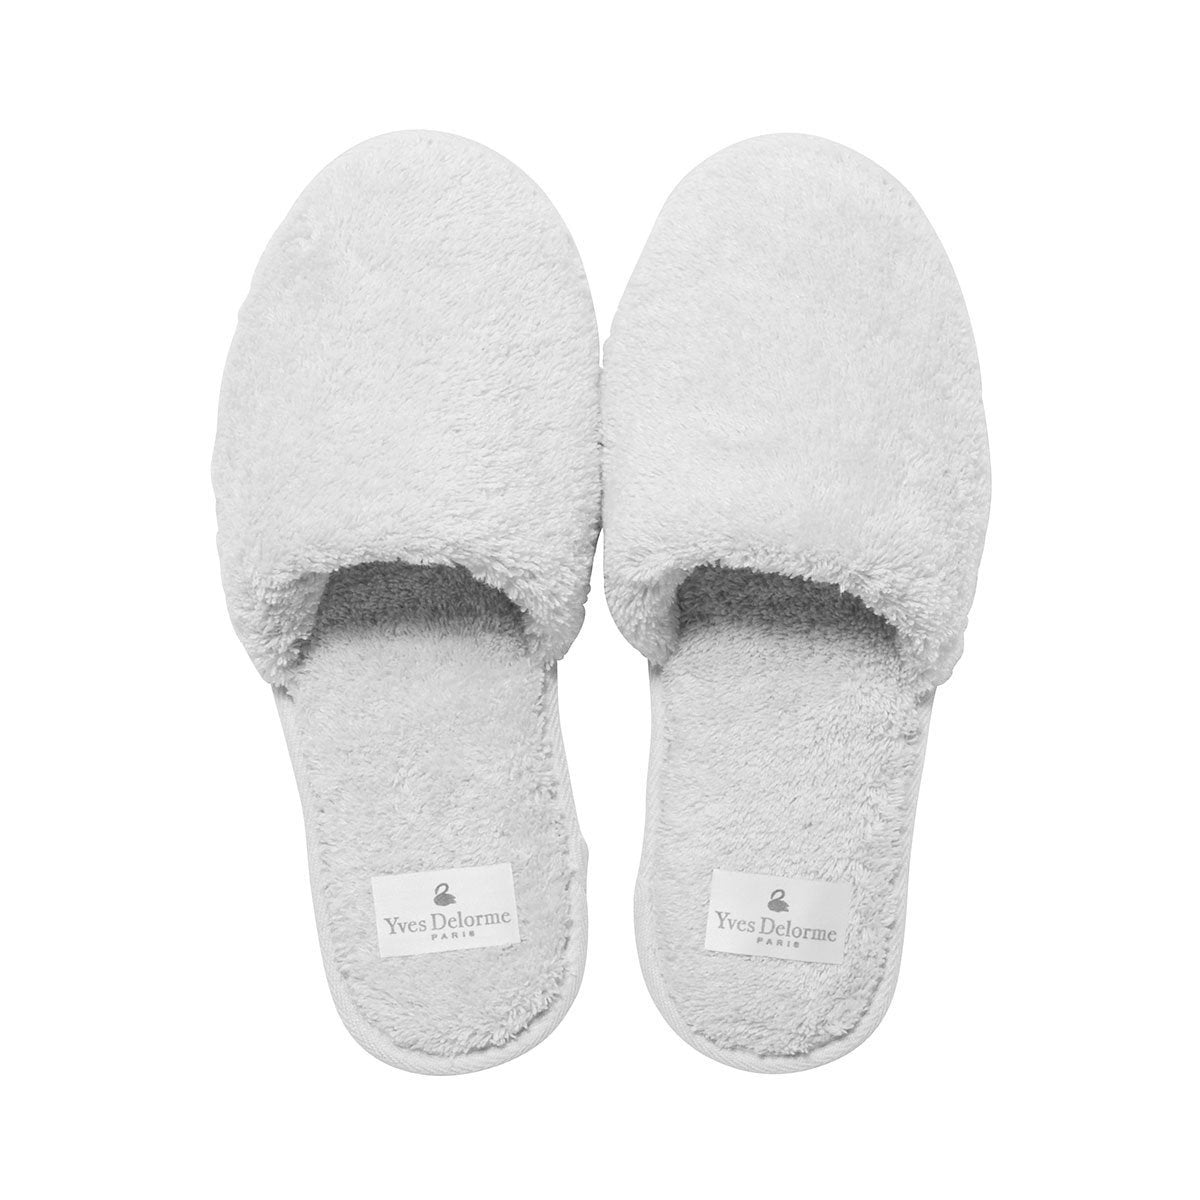 Etoile Blanc Men's Slippers by Yves Delorme | Fig Linens - White slippers